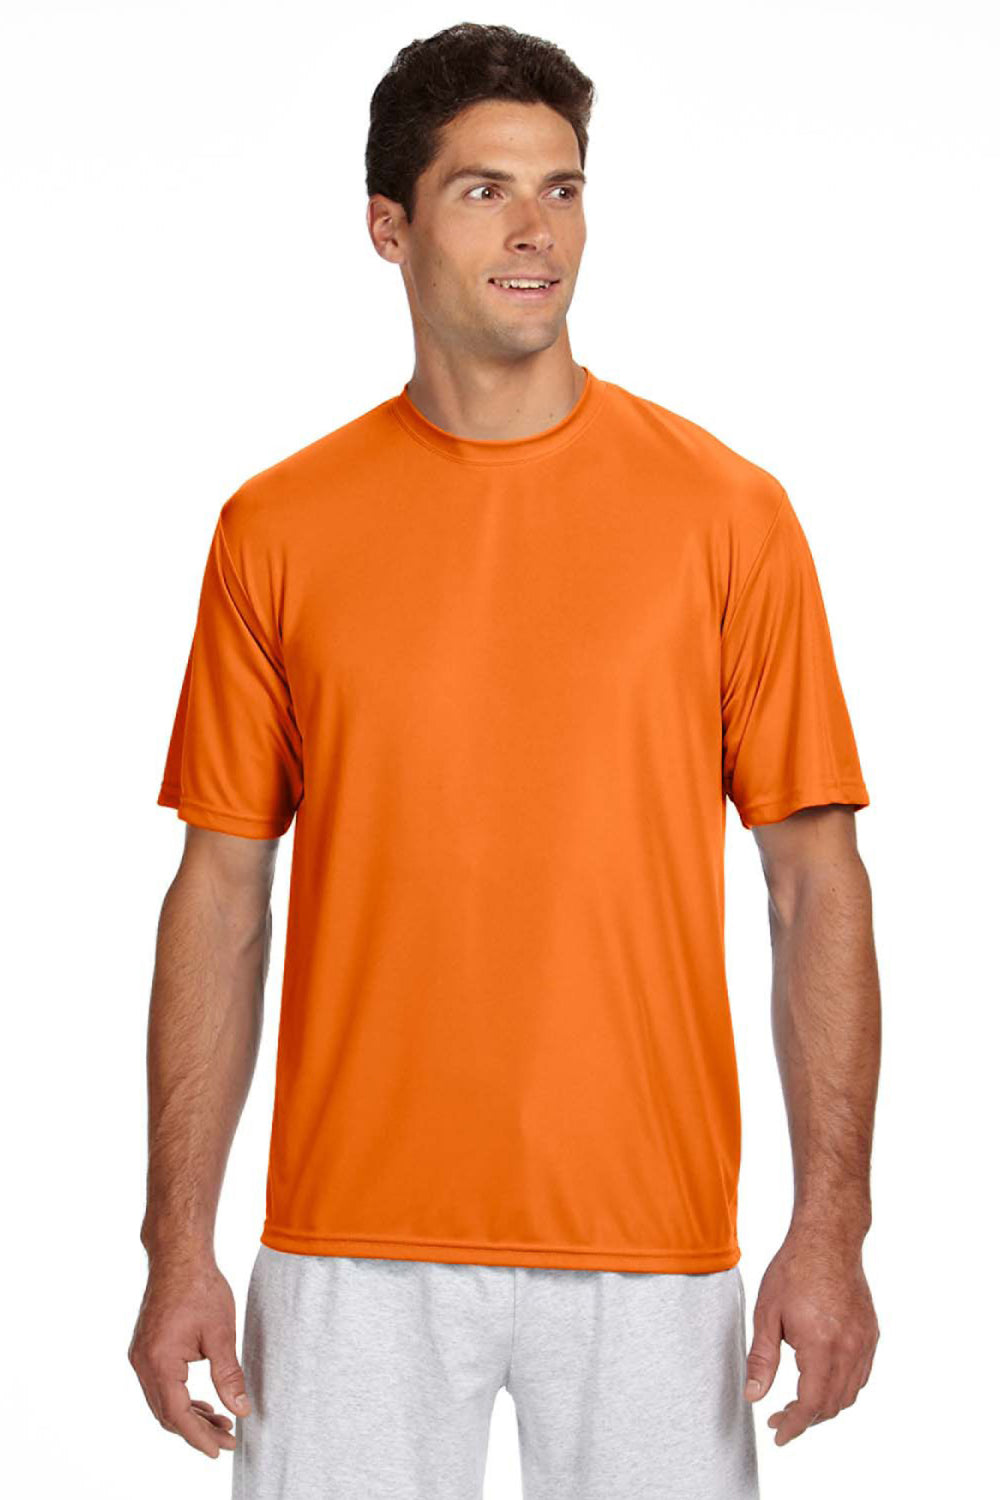 A4 N3142 Mens Performance Moisture Wicking Short Sleeve Crewneck T-Shirt Safety Orange Model Front